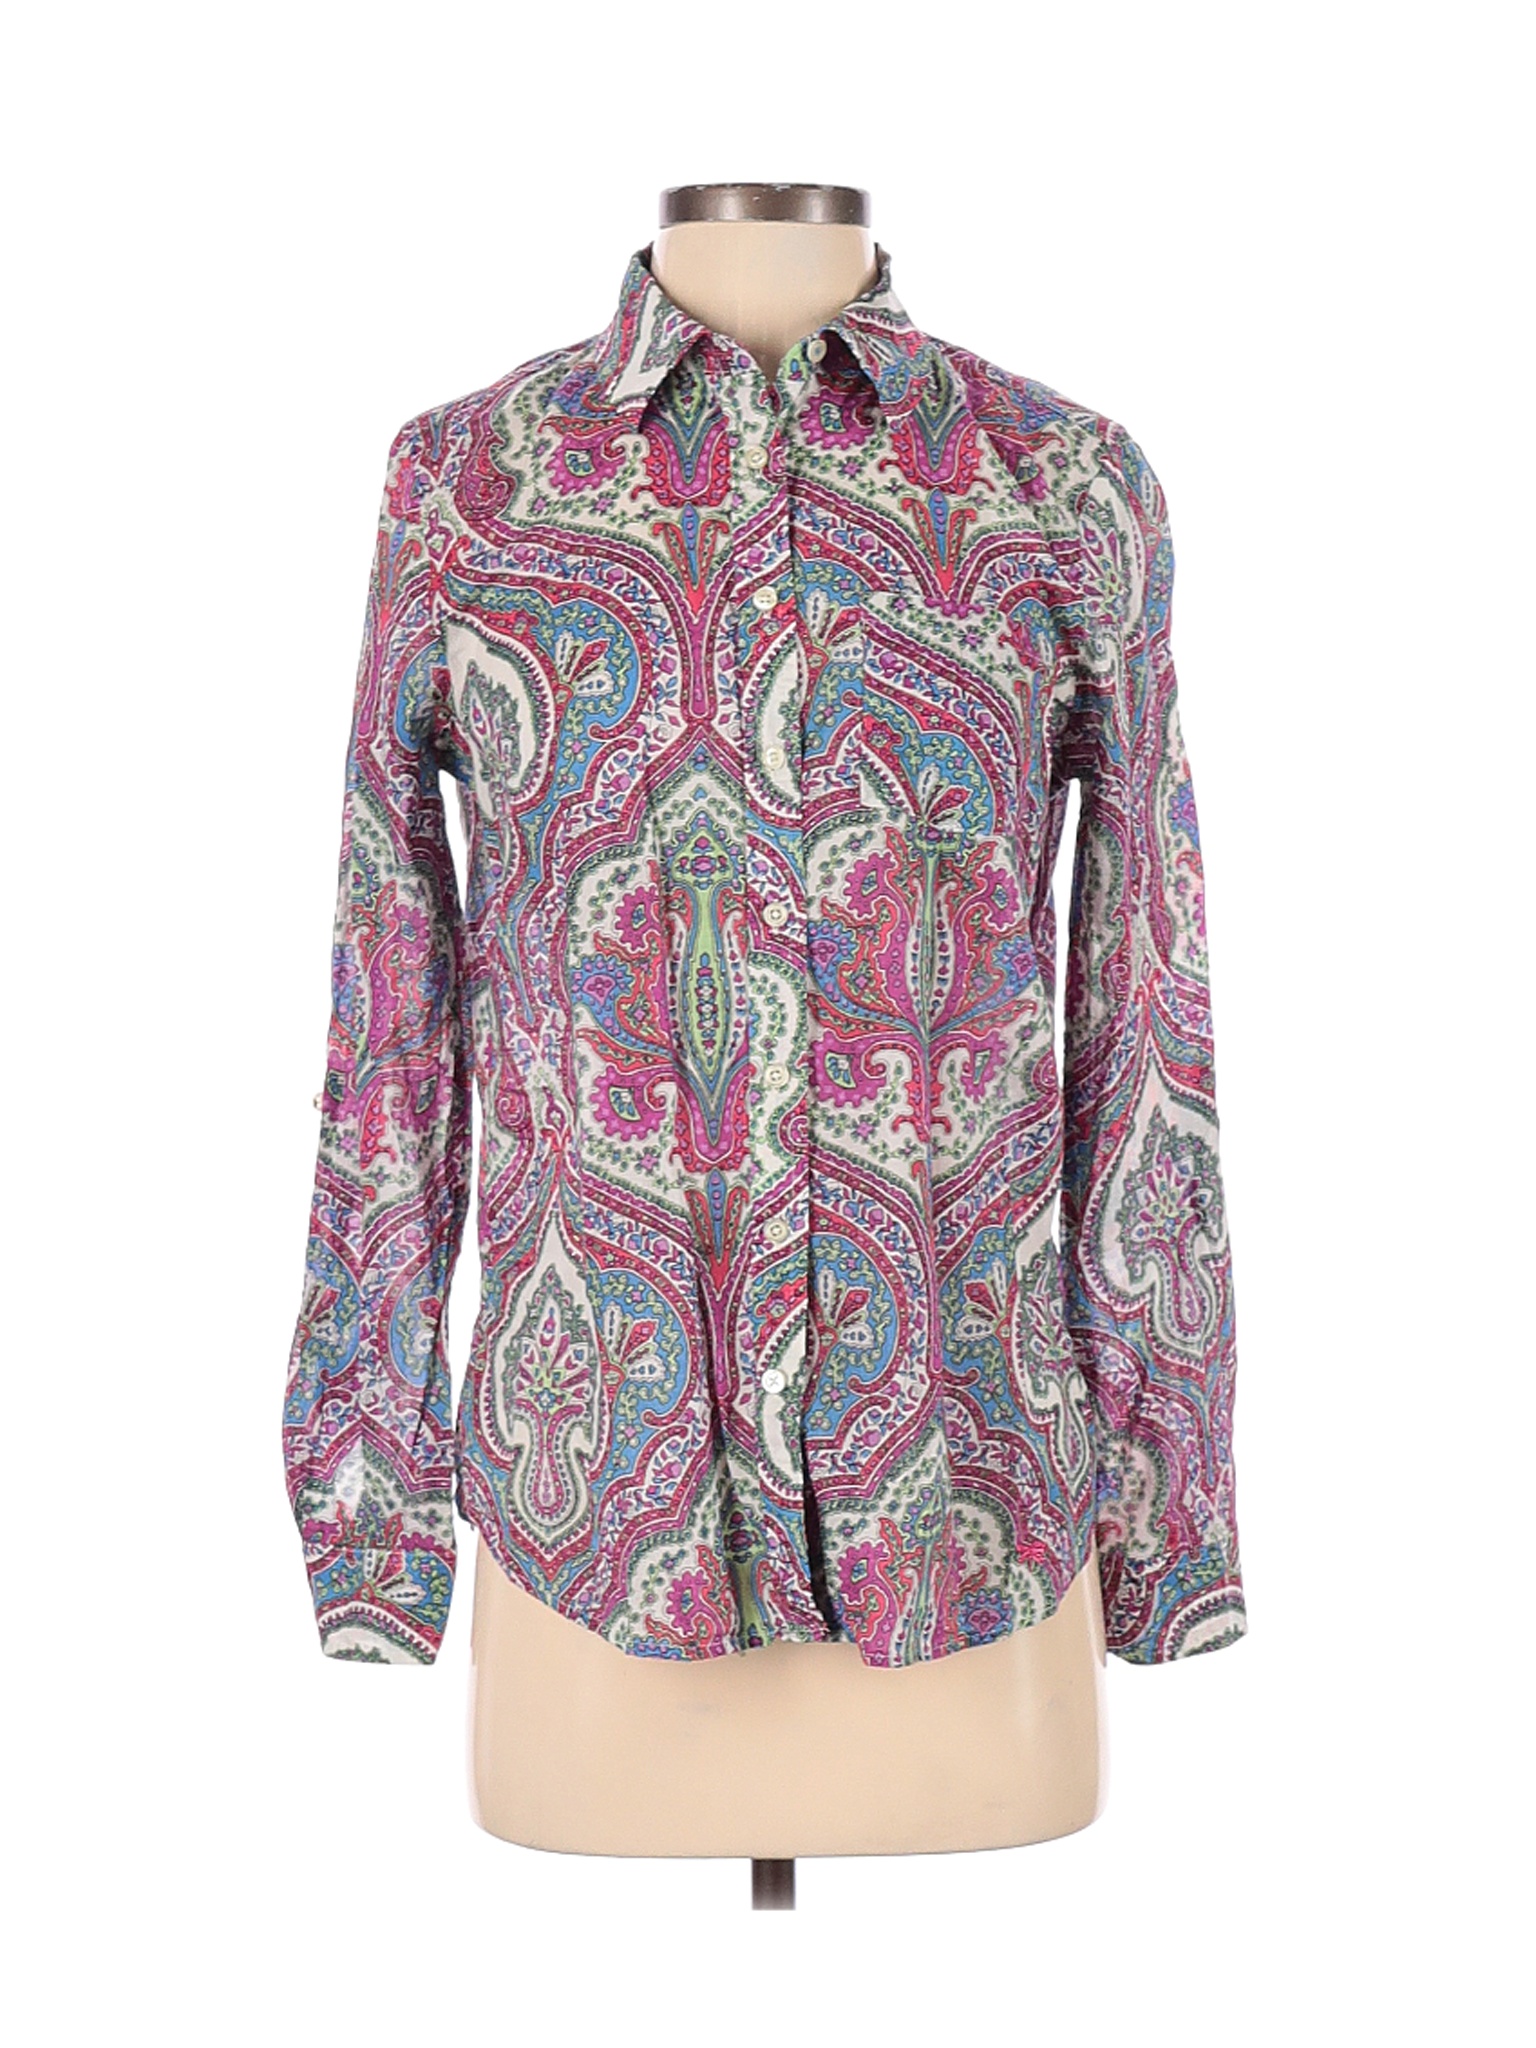 Talbots Women Purple Long Sleeve Button-Down Shirt S | eBay